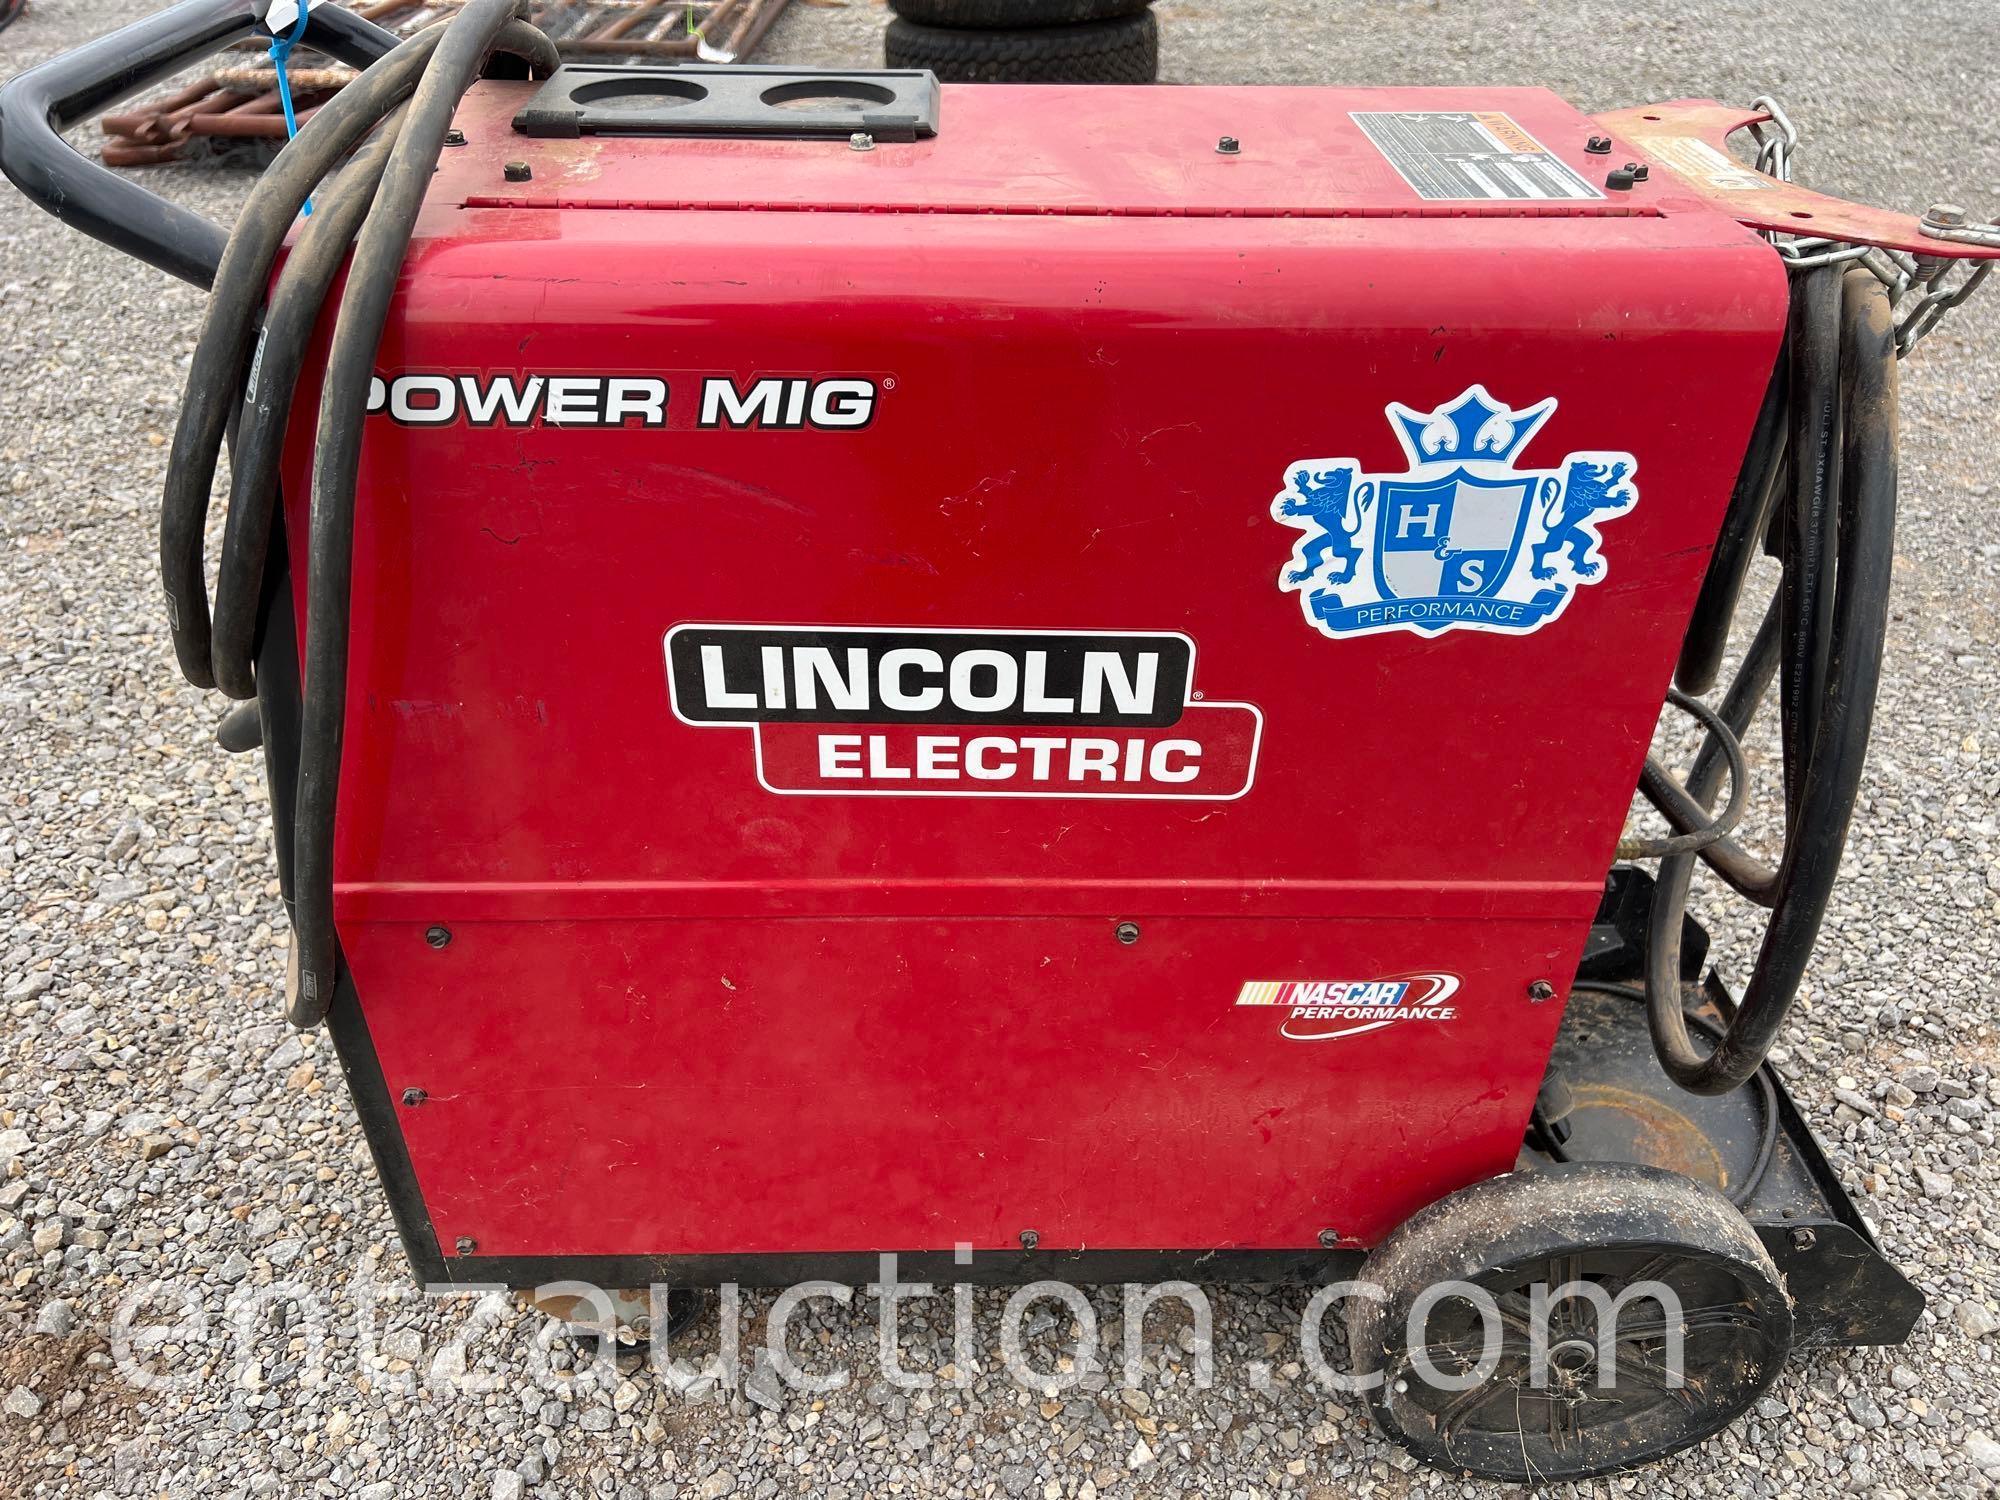 LINCOLN POWER MIG 216 WELDER W/ LEADS